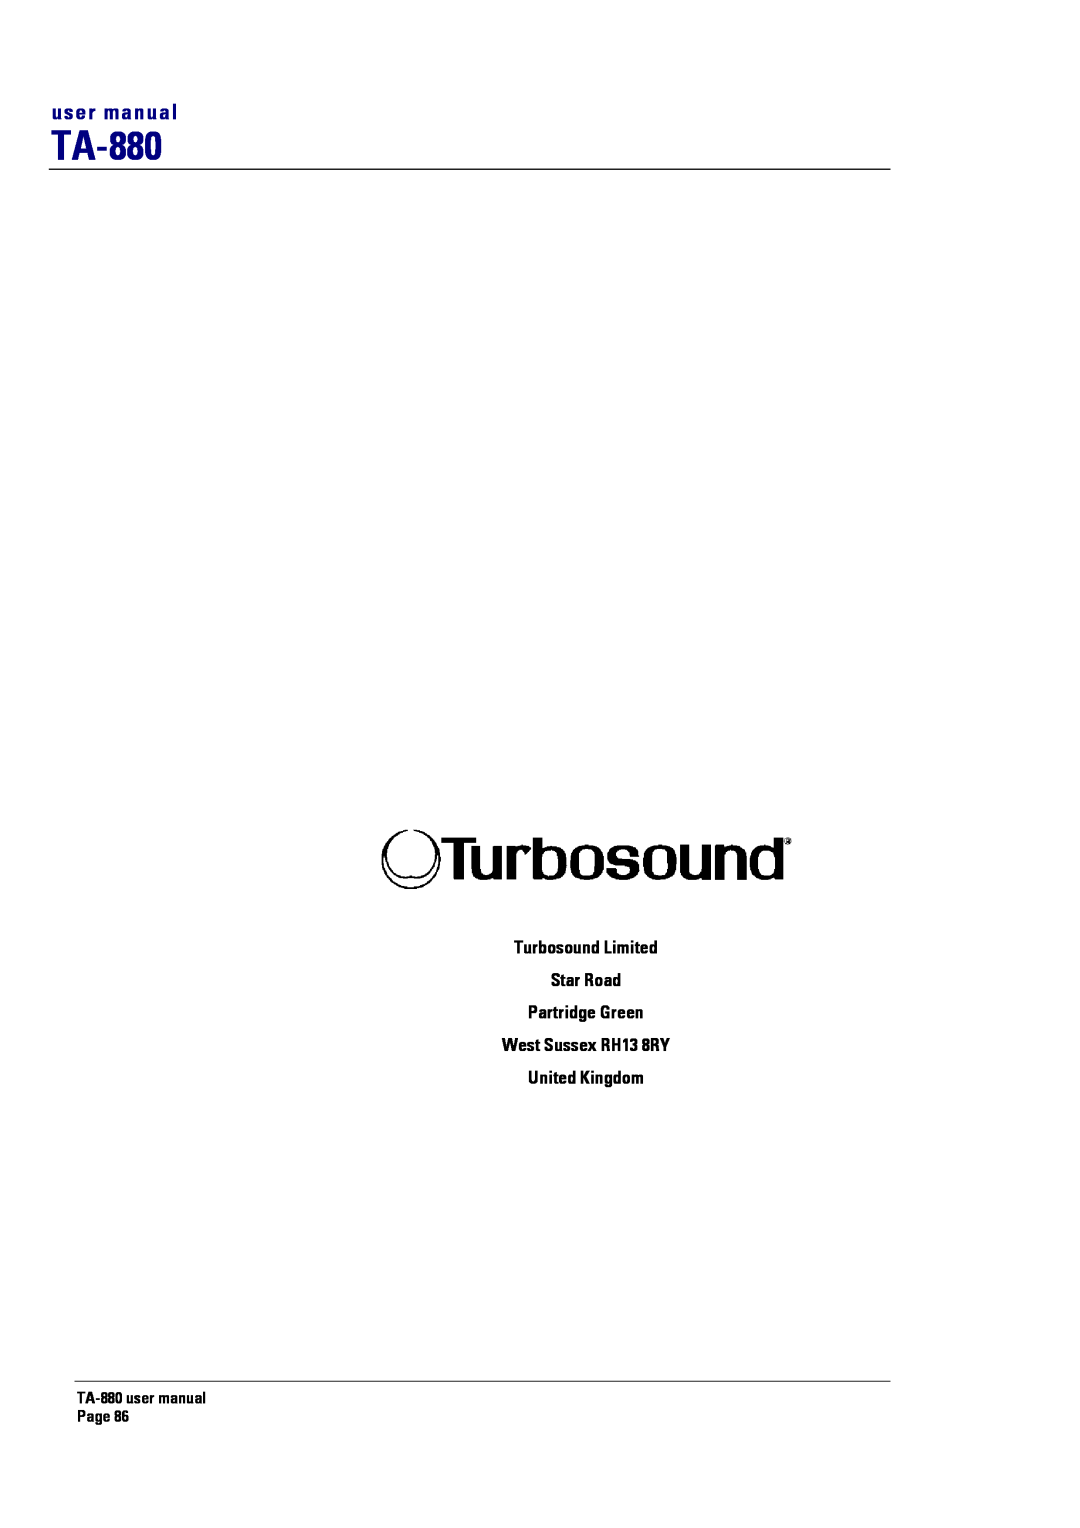 Turbosound TA-880 user manual Turbosound Limited Star Road Partridge Green, West Sussex RH13 8RY United Kingdom 